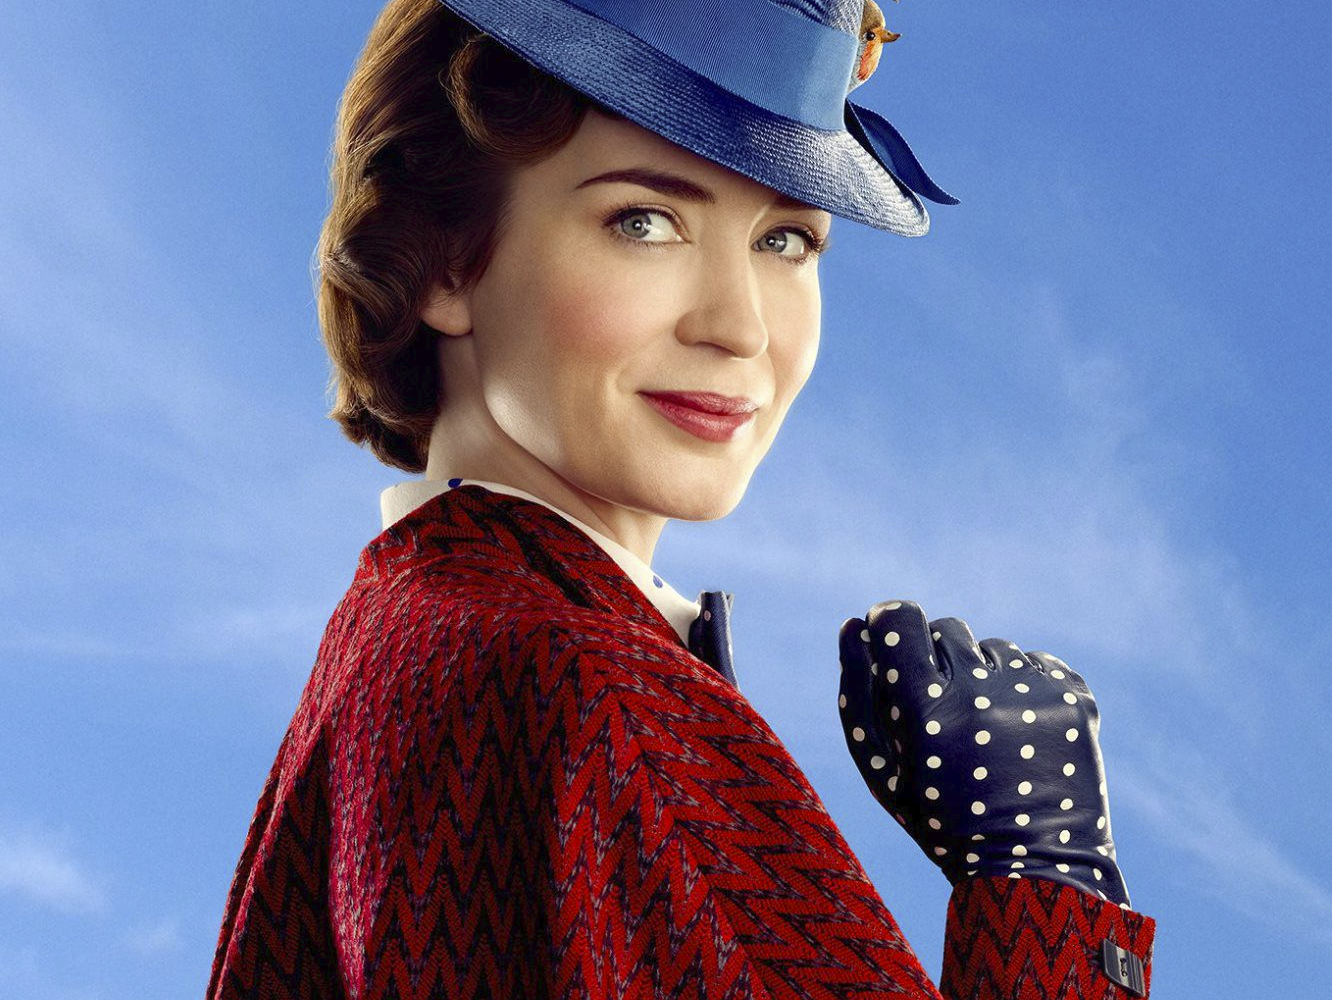  Espléndido nuevo tráiler para ‘Mary Poppins Returns’, repleto de guiños a la original